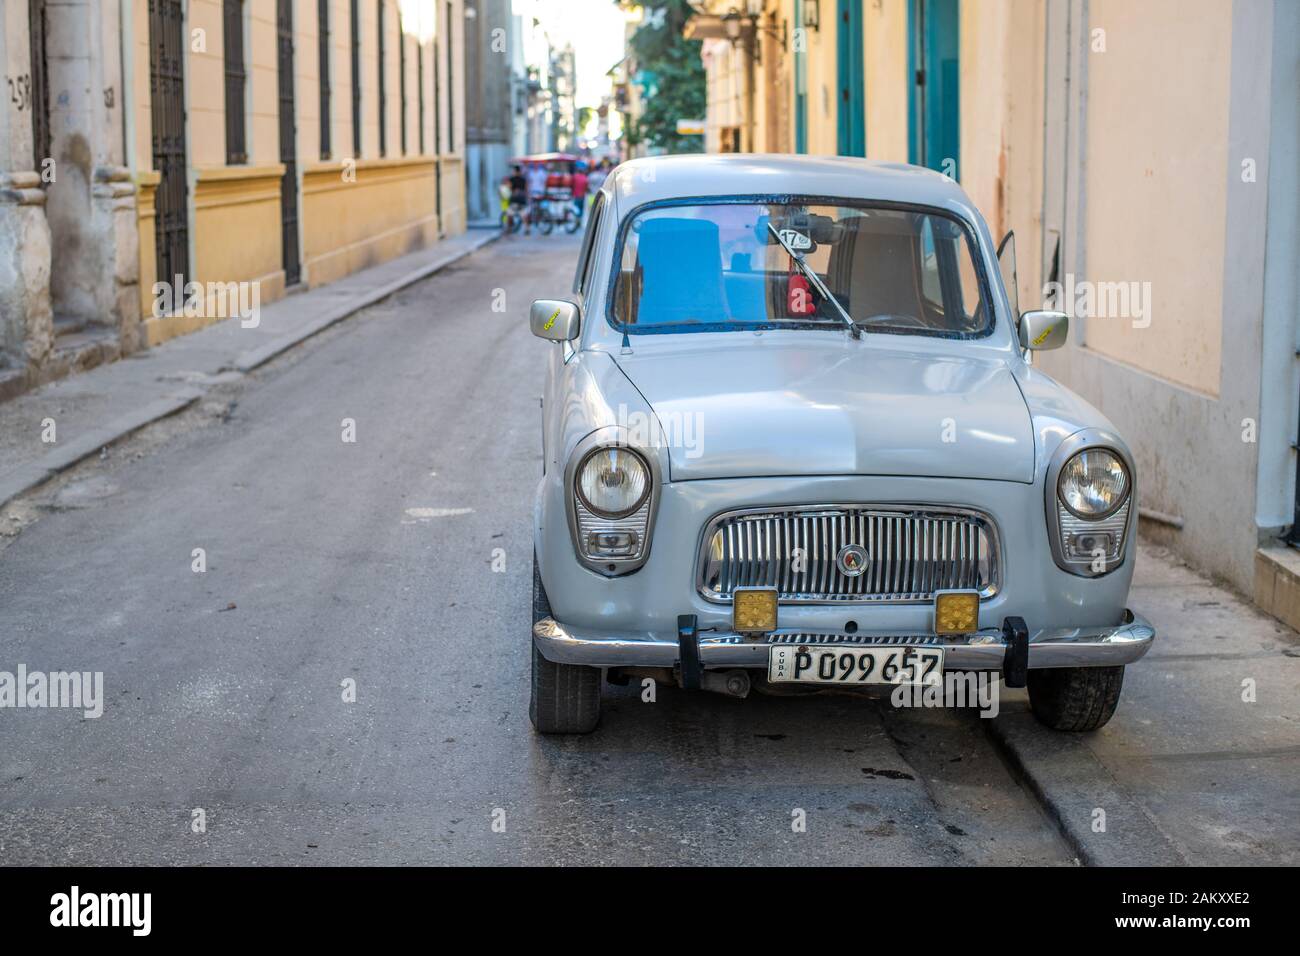 A classic European car parked on a street in Havana, Cuba Stock Photo